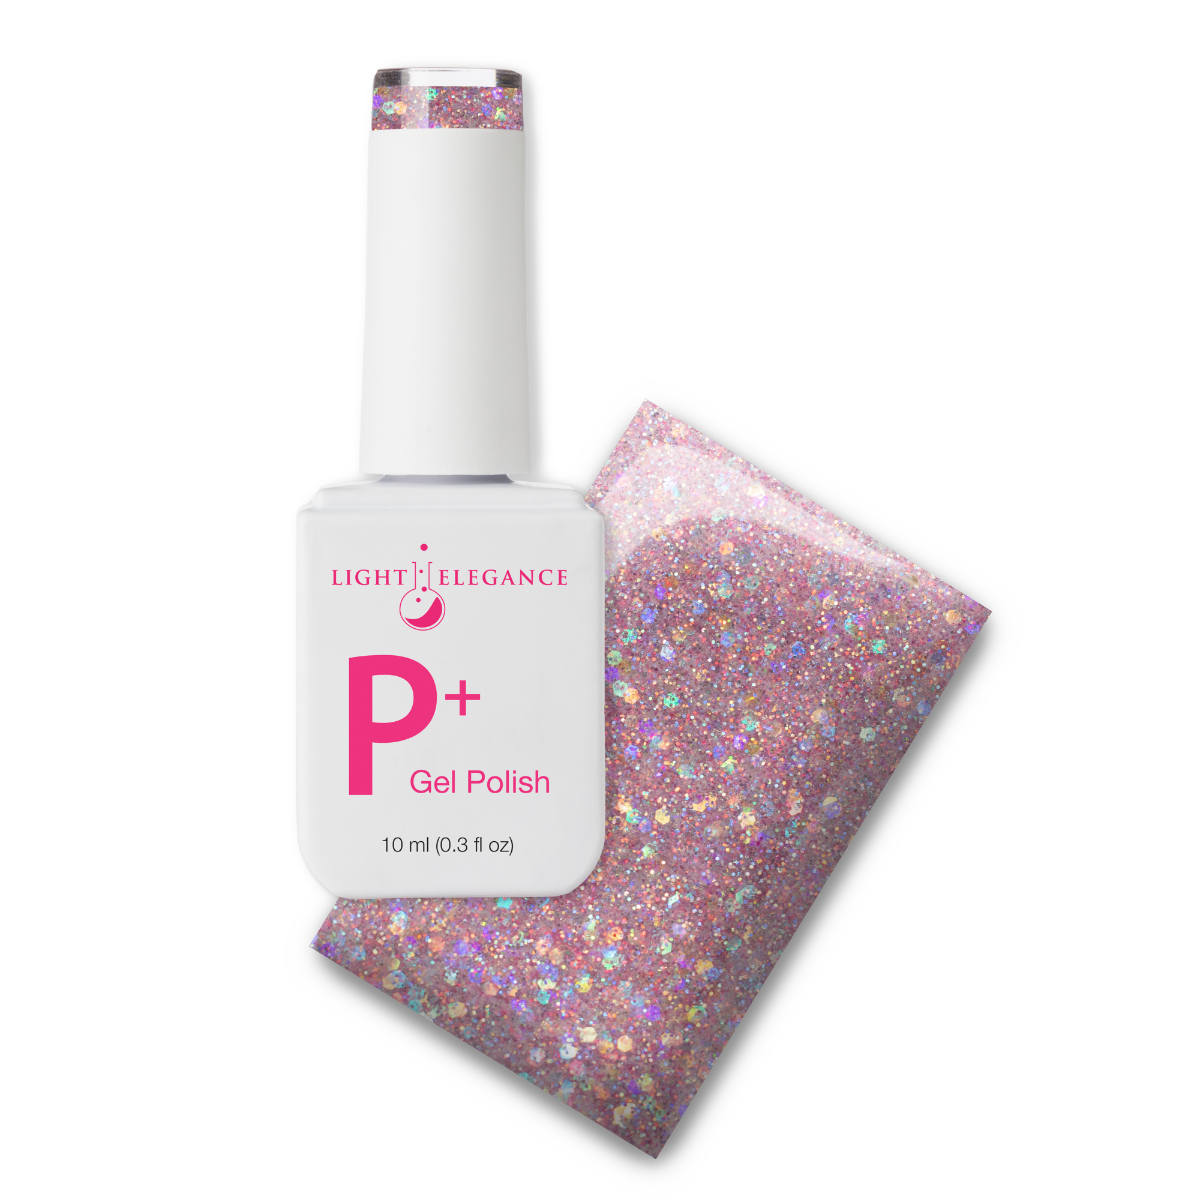 Light Elegance P+ Soak Off Glitter Gel - Free Spirit :: New Packaging - Creata Beauty - Professional Beauty Products